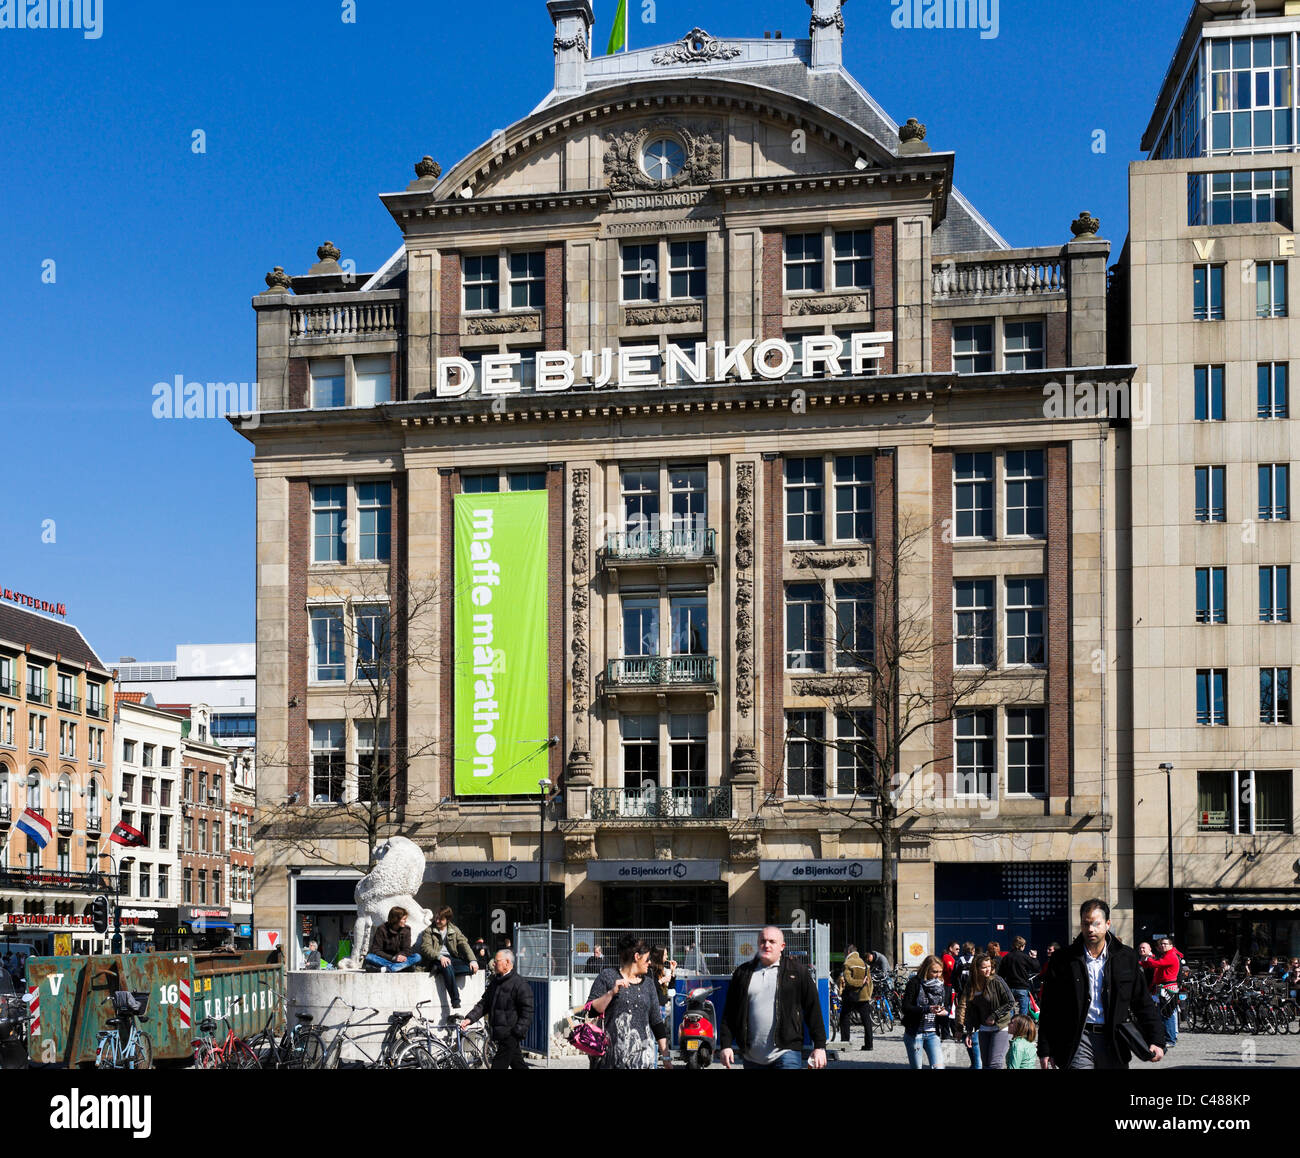 La Piazza Dam ingresso del flagship De Bijenkorf department store, Amsterdam, Paesi Bassi Foto Stock